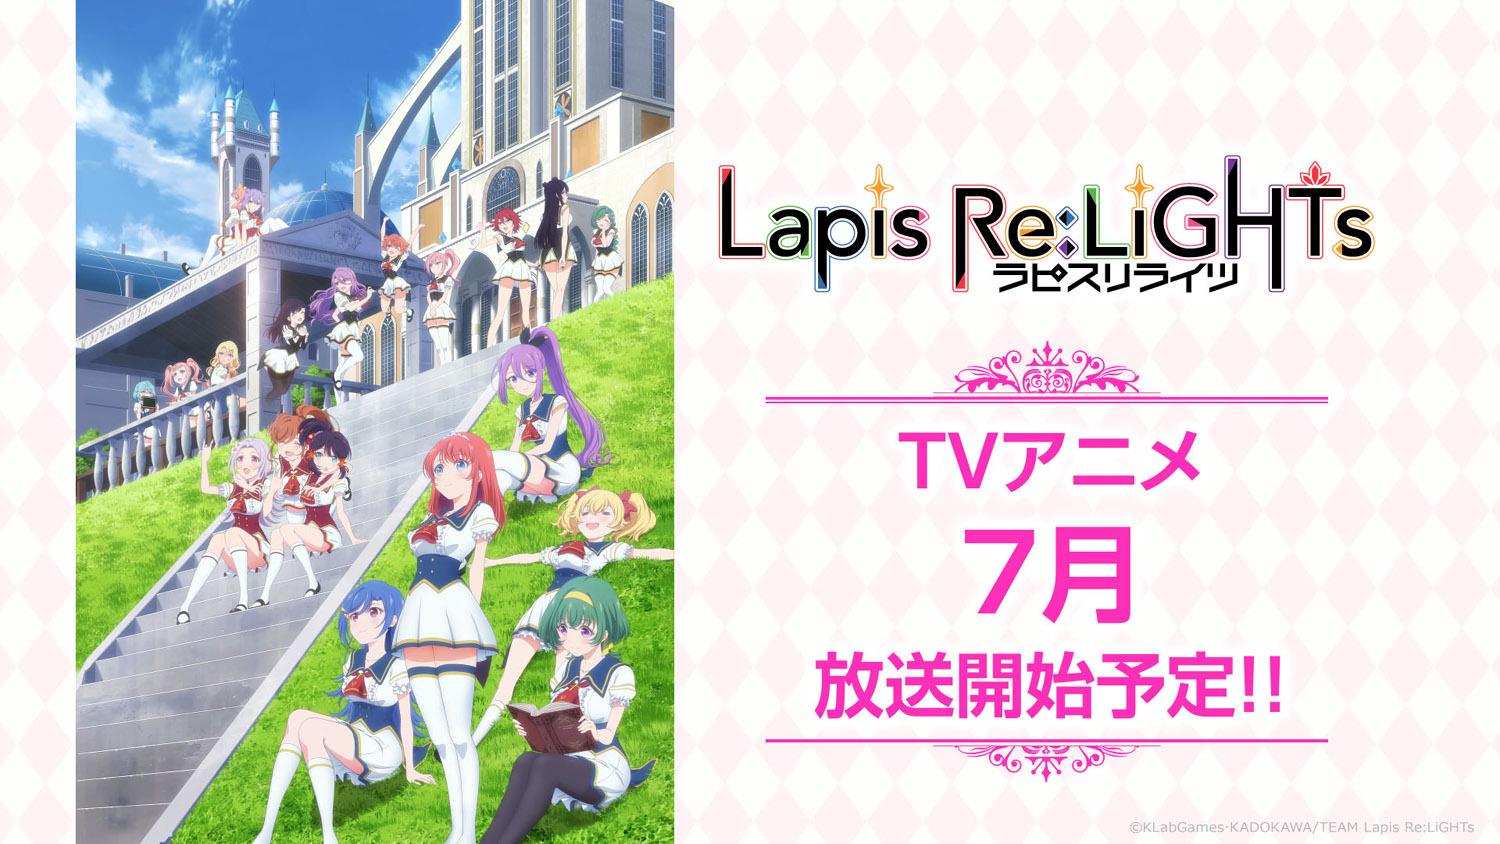 TVアニメ『Lapis Re:LiGHTs』キービジュアル （c）KLabGames･KADOKAWA/TEAM Lapis Re:LiGHTs